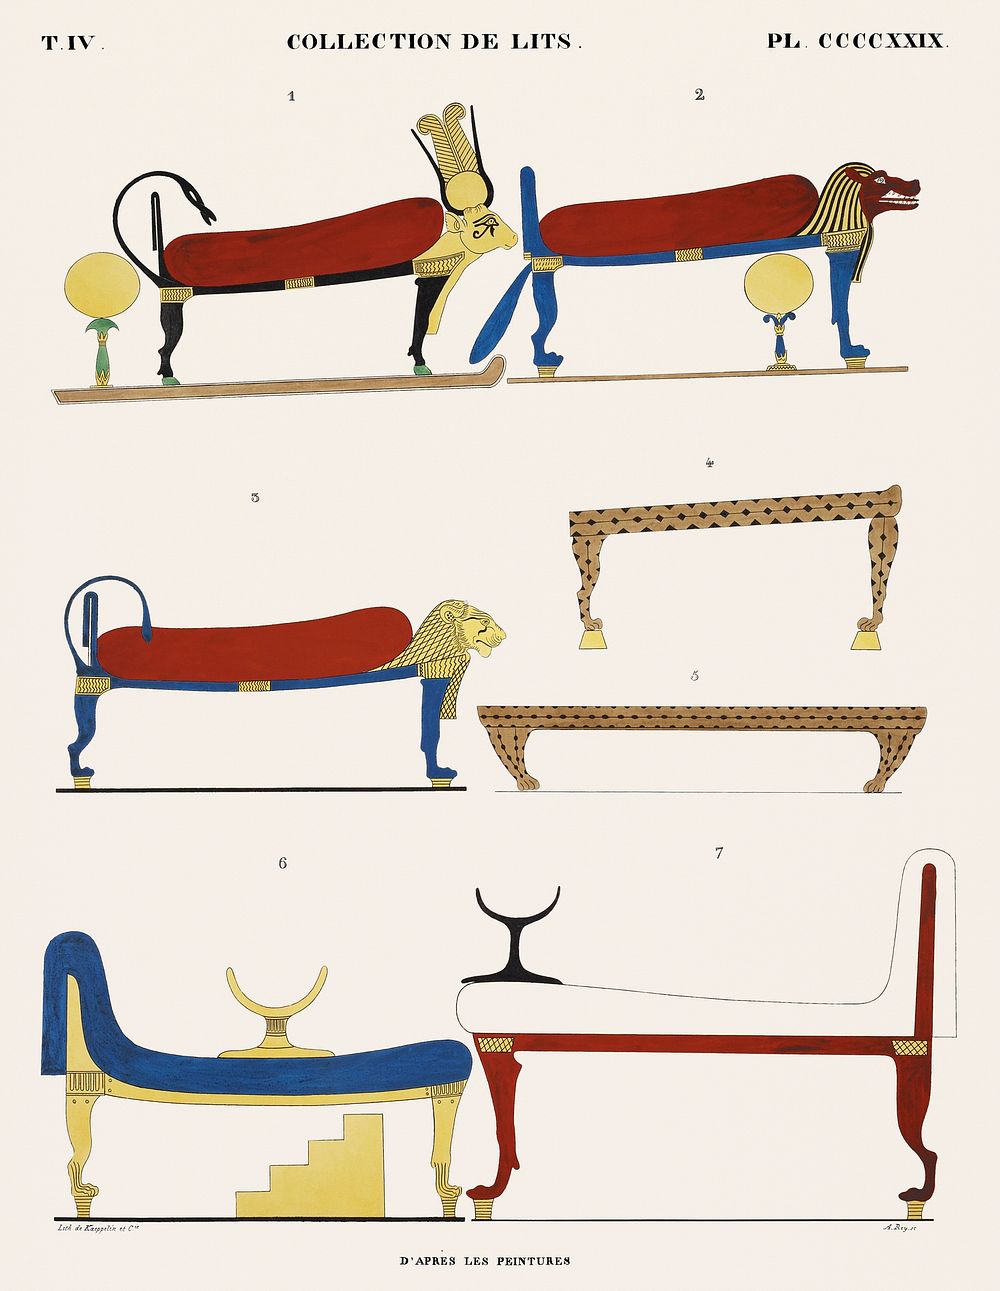 Vintage illustration of Bed collection